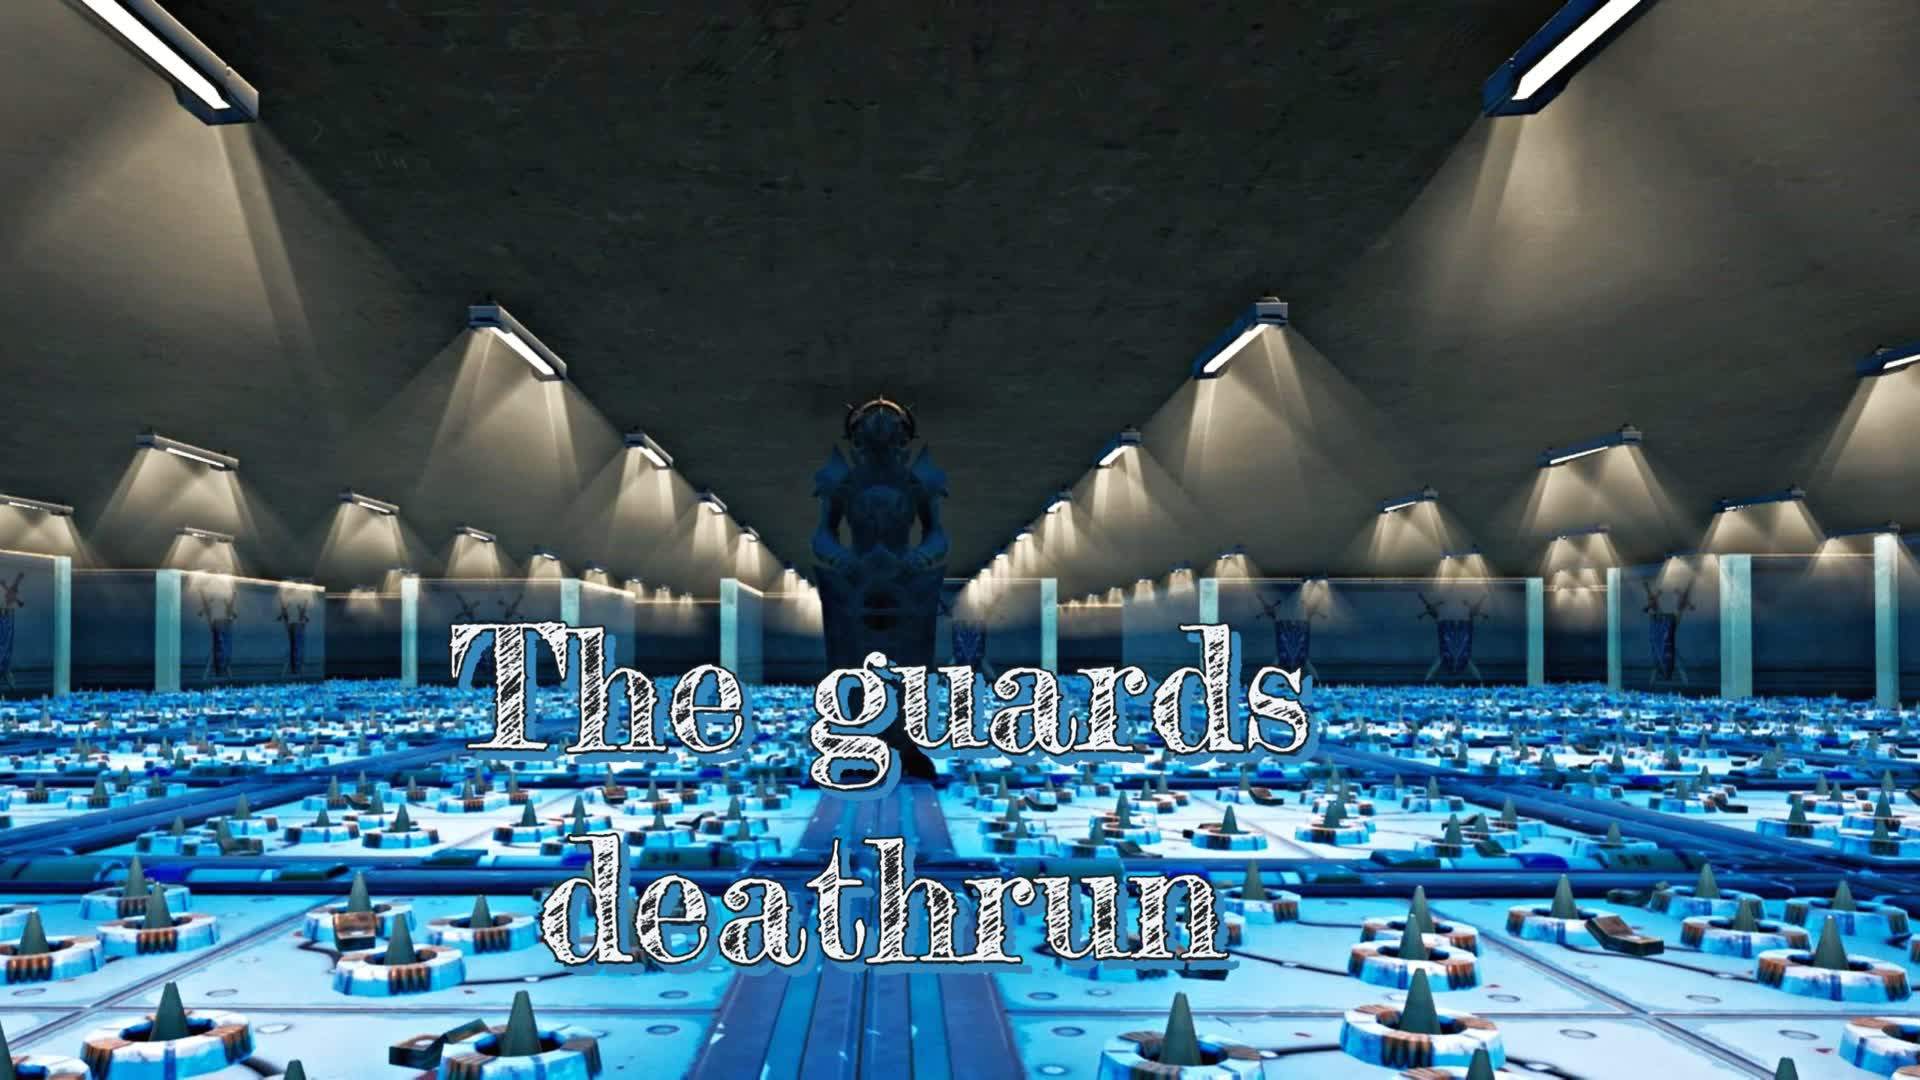 The guards deathrun